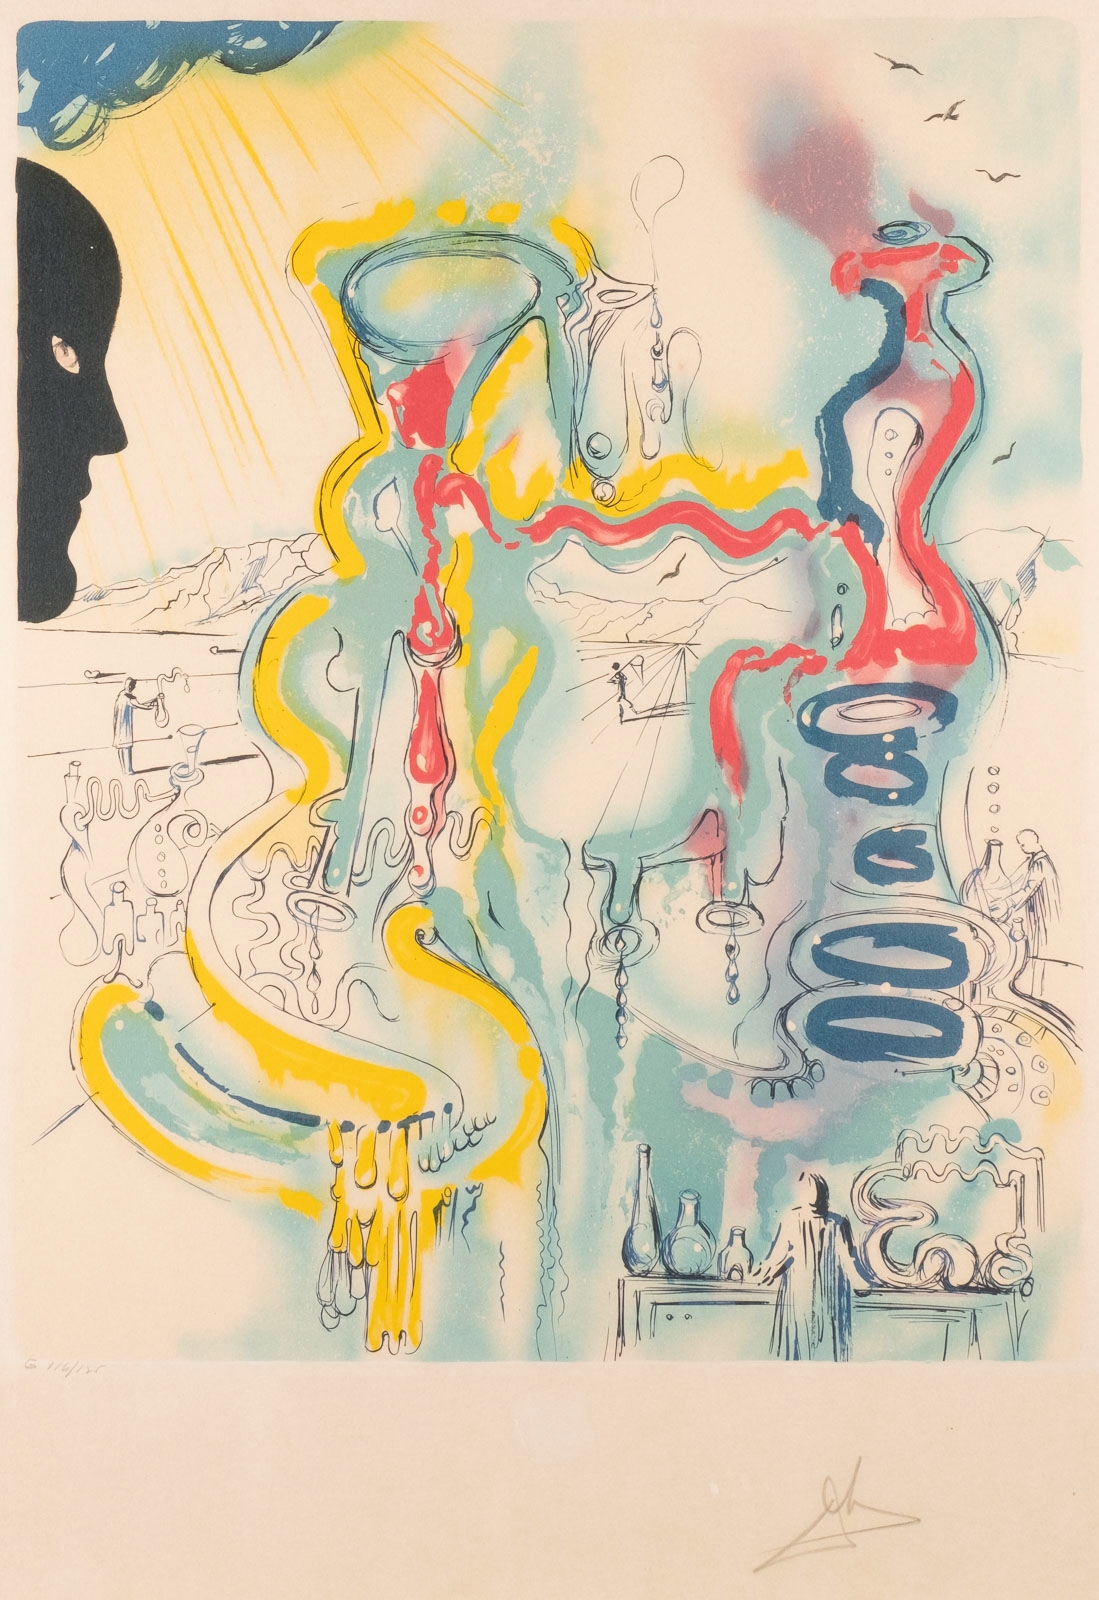 THE CHEMIST by Salvador Dalí, 1979/80